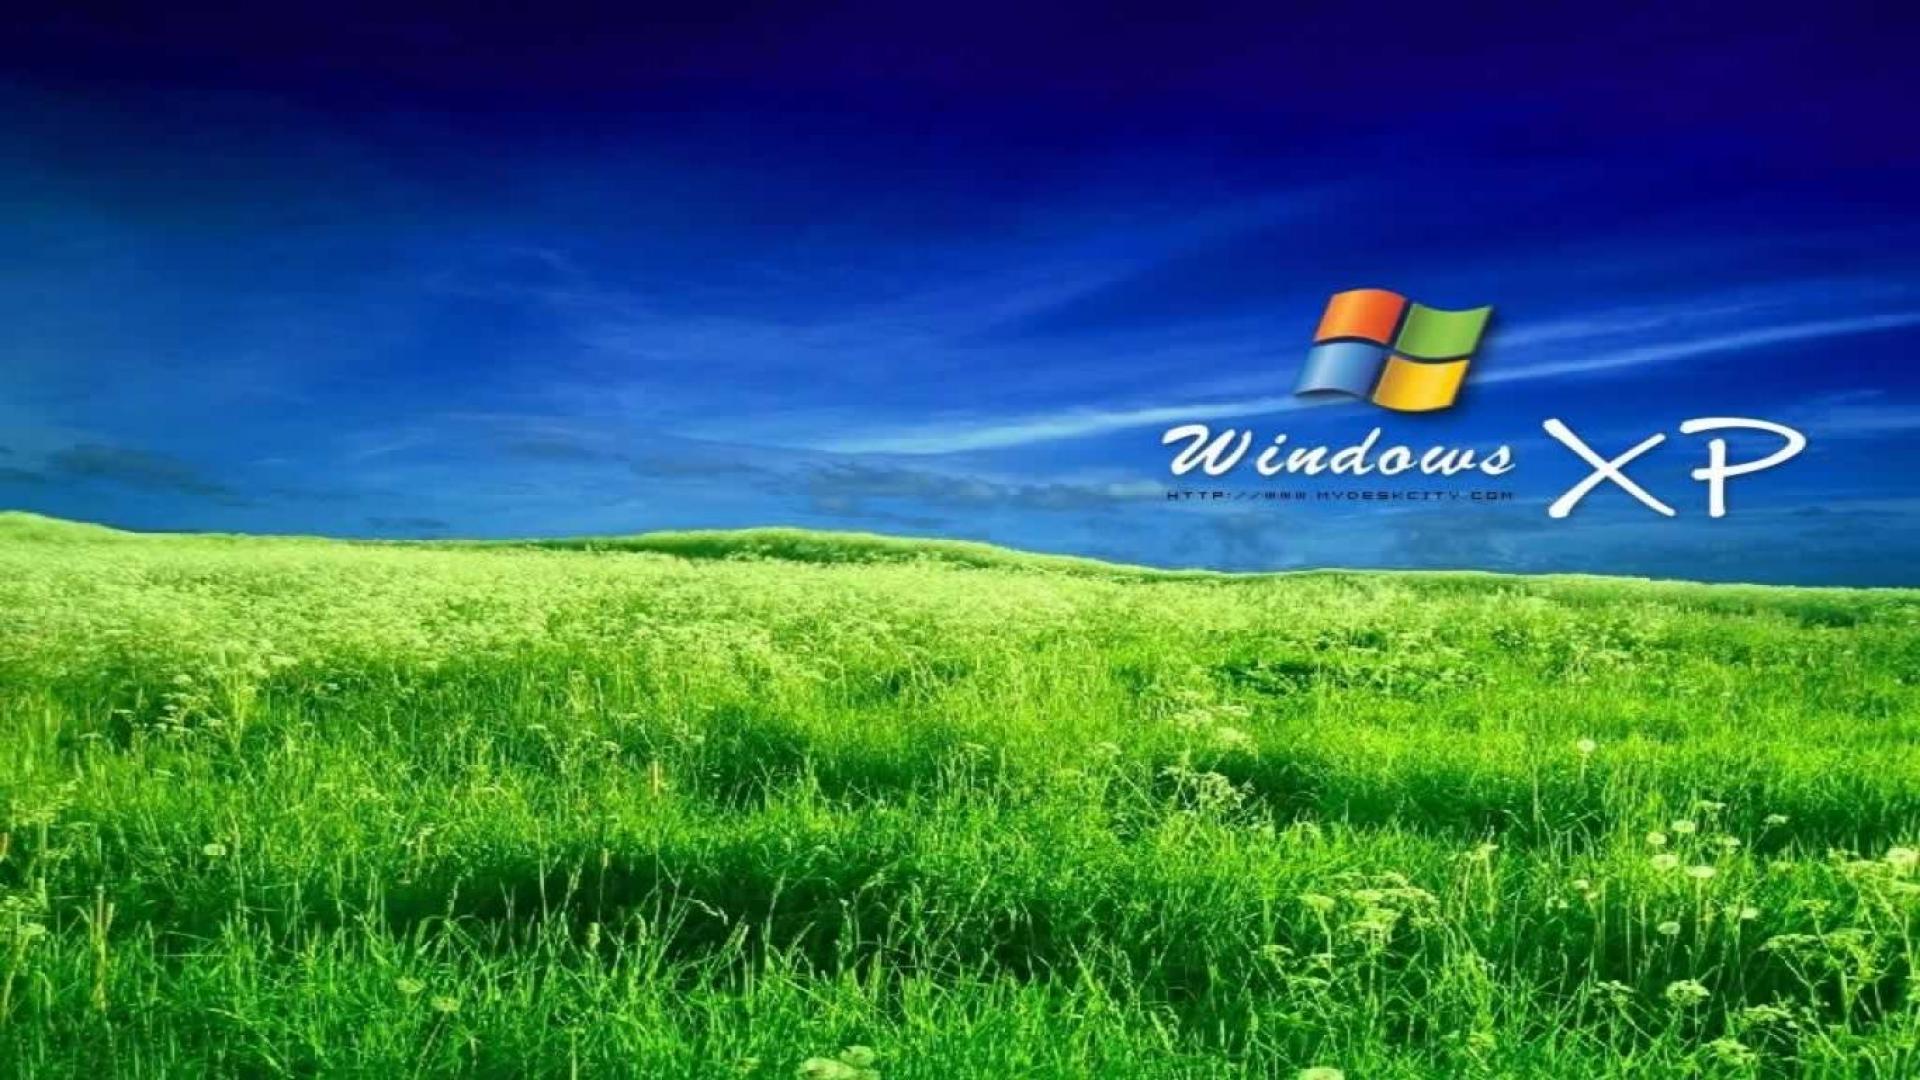 Windows Xp Wallpaper Hd 1920x1080 , HD Wallpaper & Backgrounds